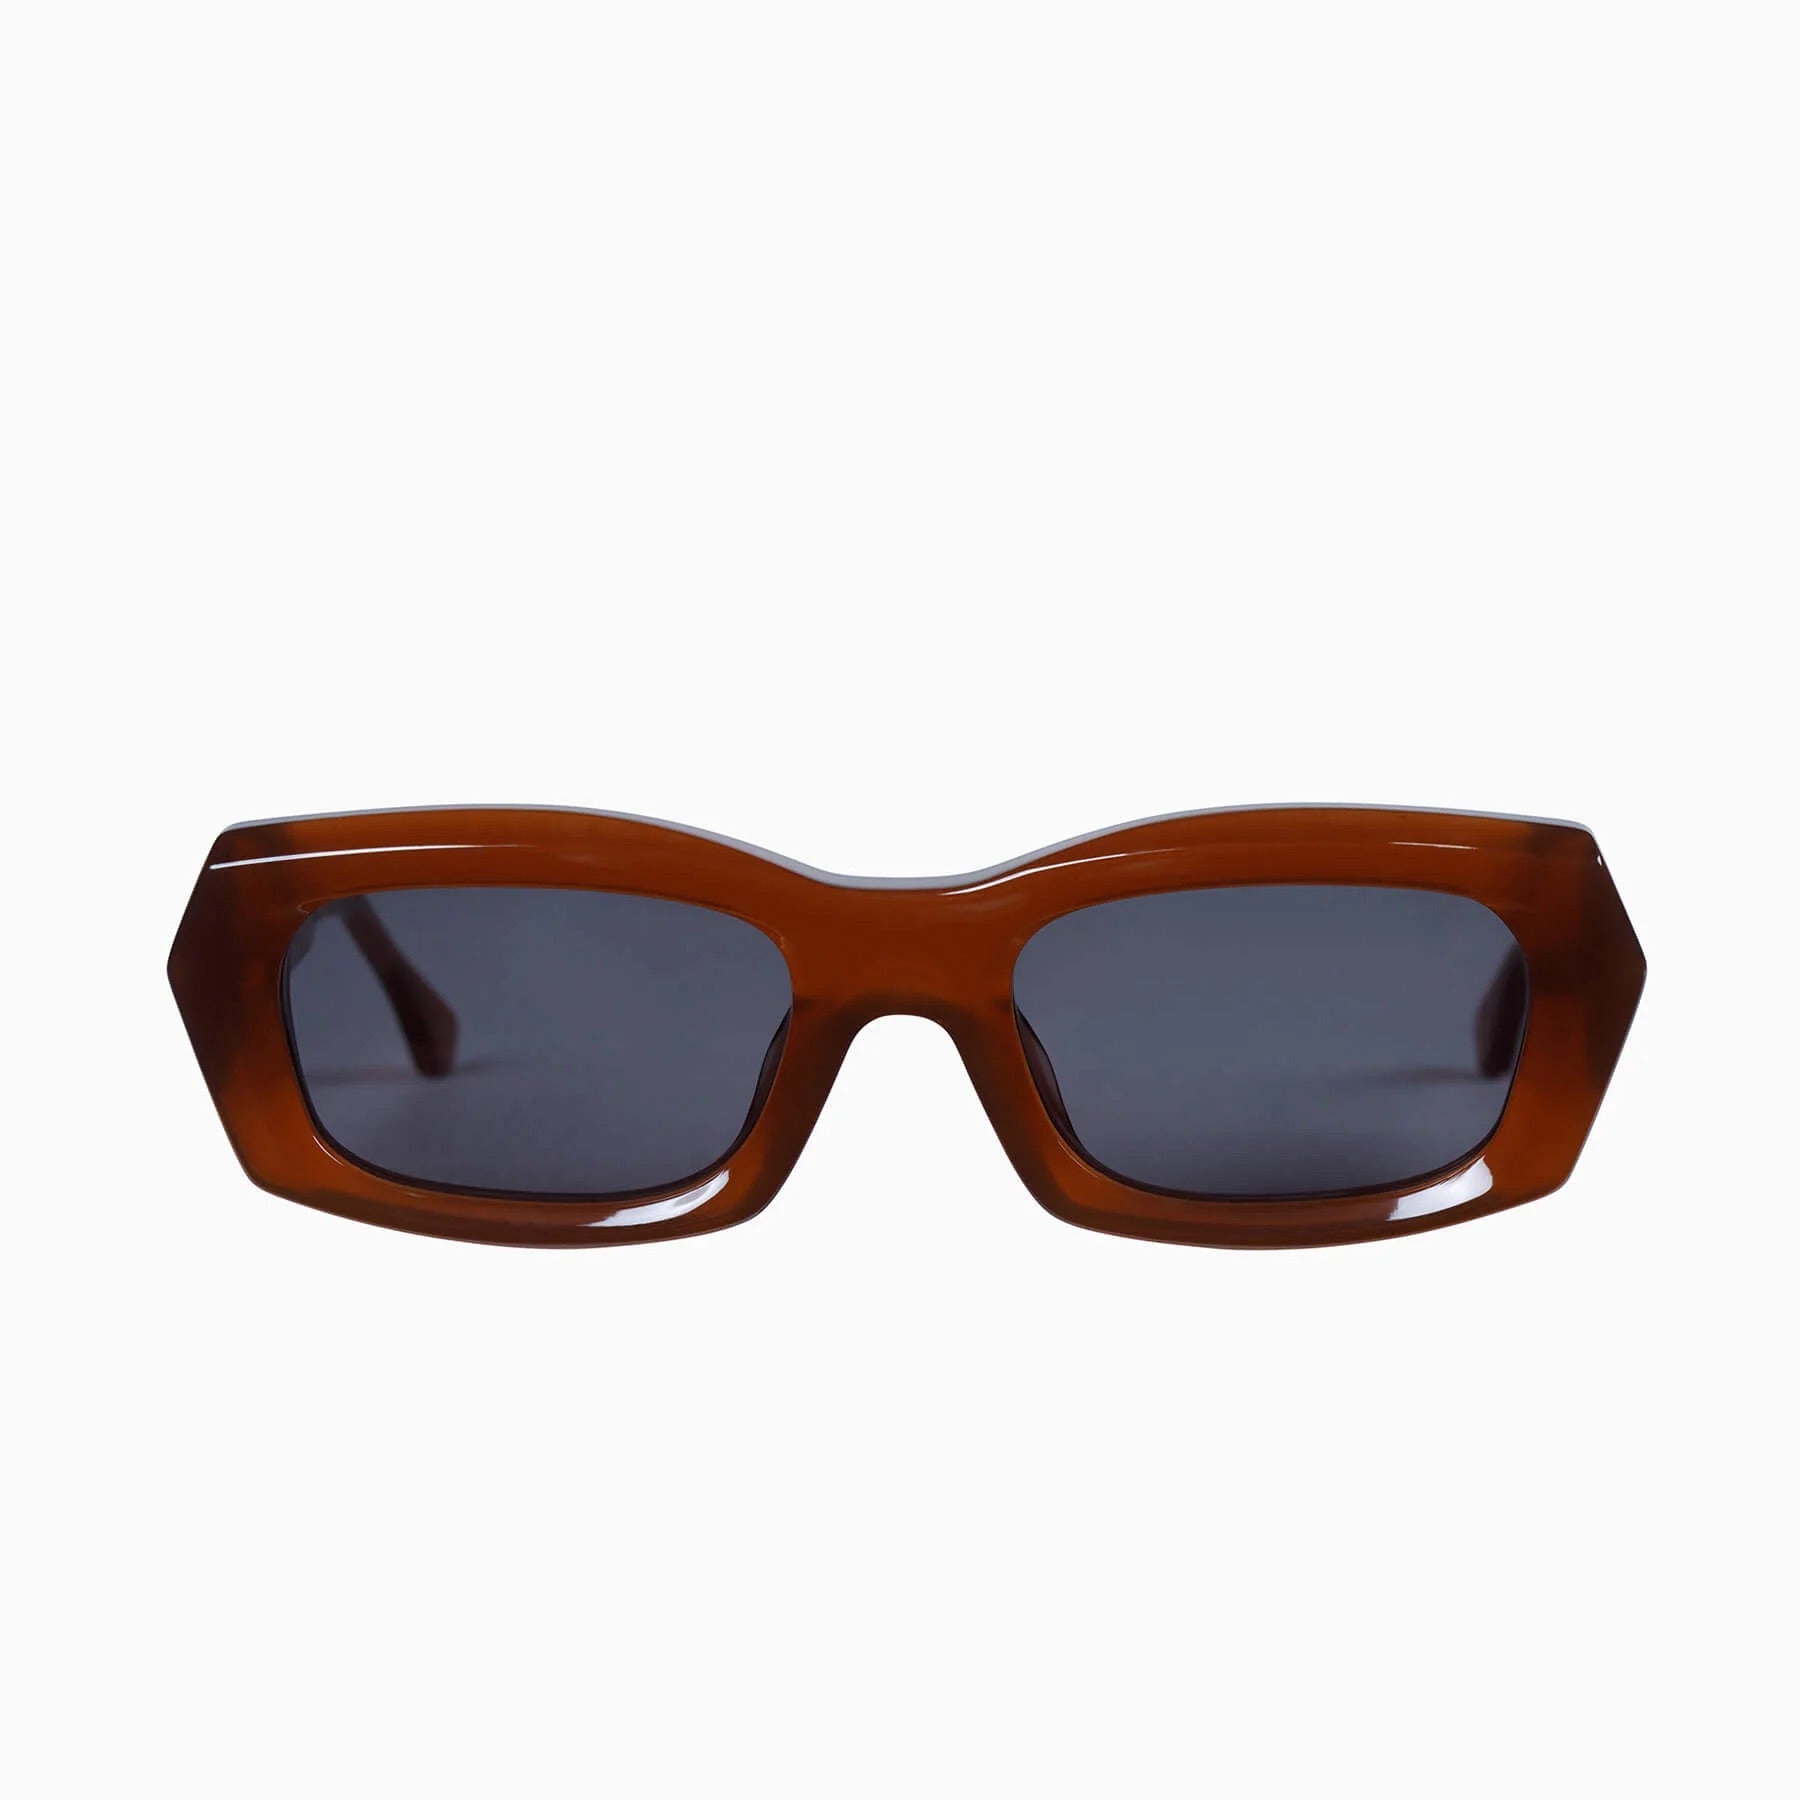 Holycity | Sunglasses - Cinnamon / Black Lens